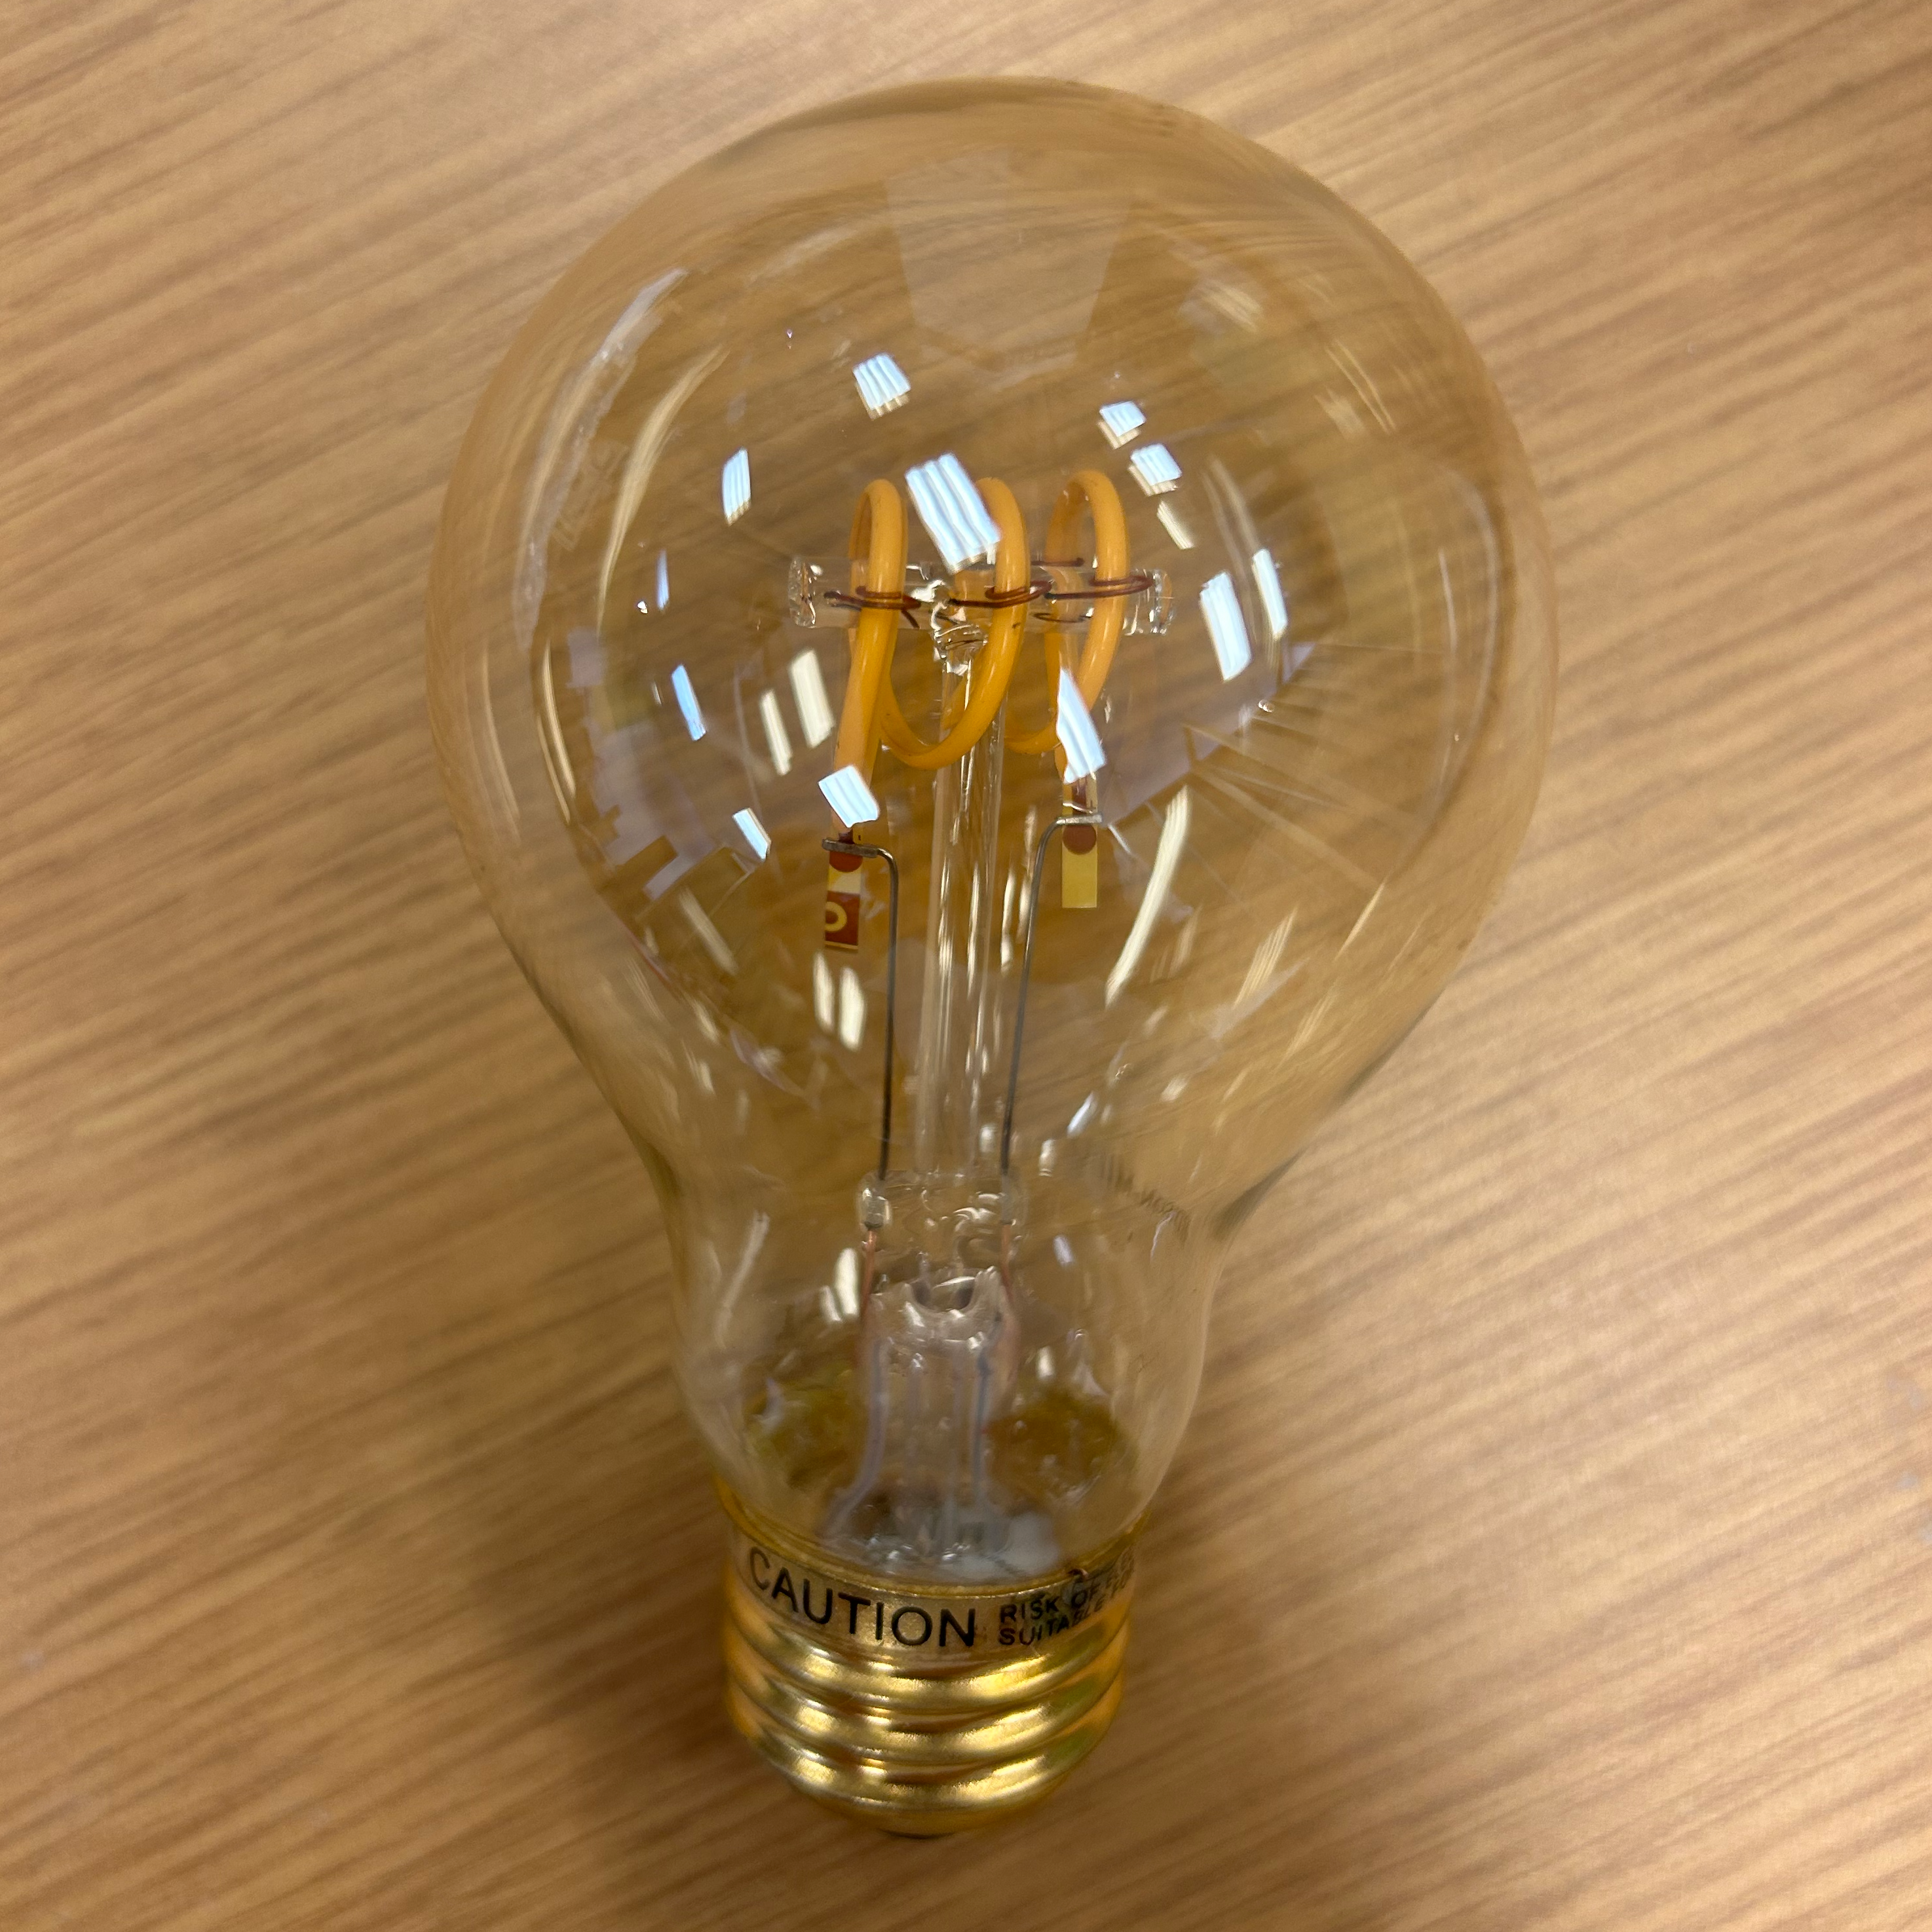 Vintage LED Edison Light Bulb 2W 2200K Warm White E26 base, Dimmable - Amber Glass